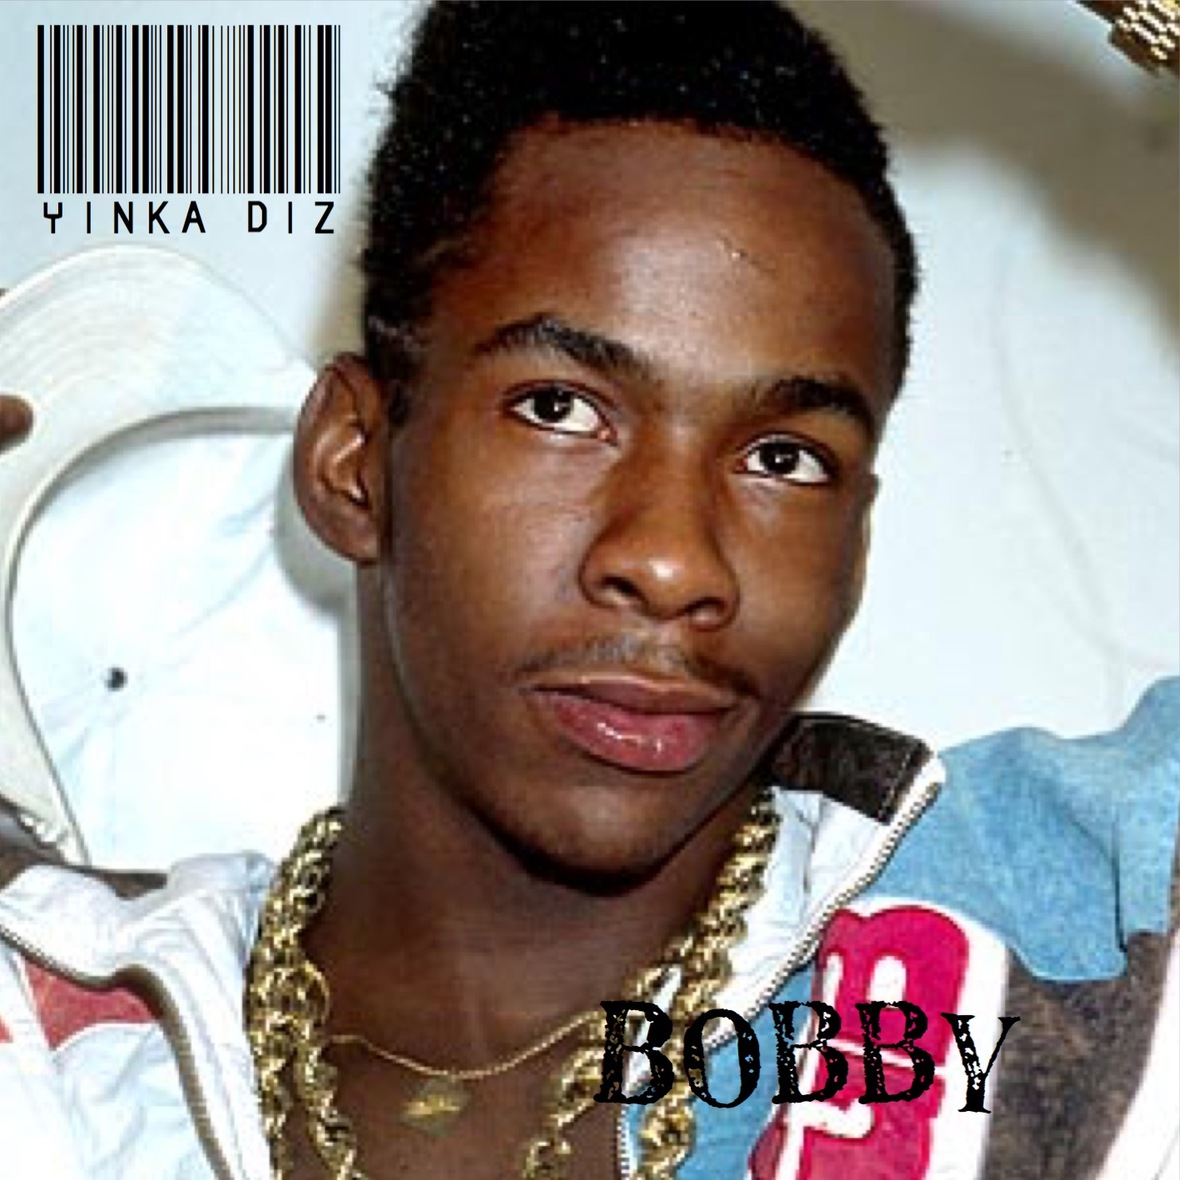 Yinka Diz Pays Homage To His Favorite Group w/ “Bobby”